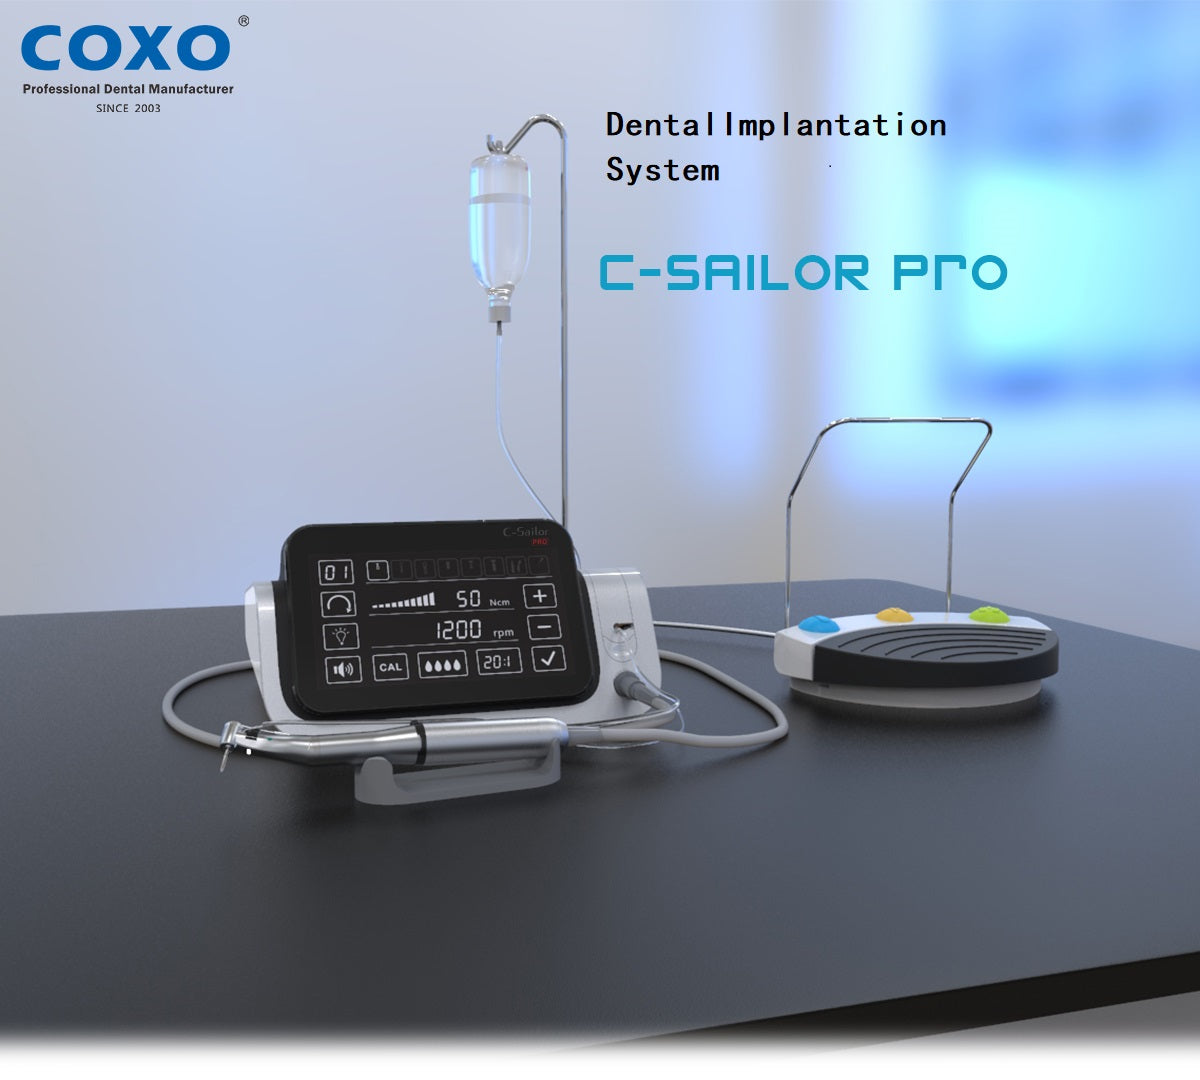 COXO Dental Implant Motor C-sailor pro